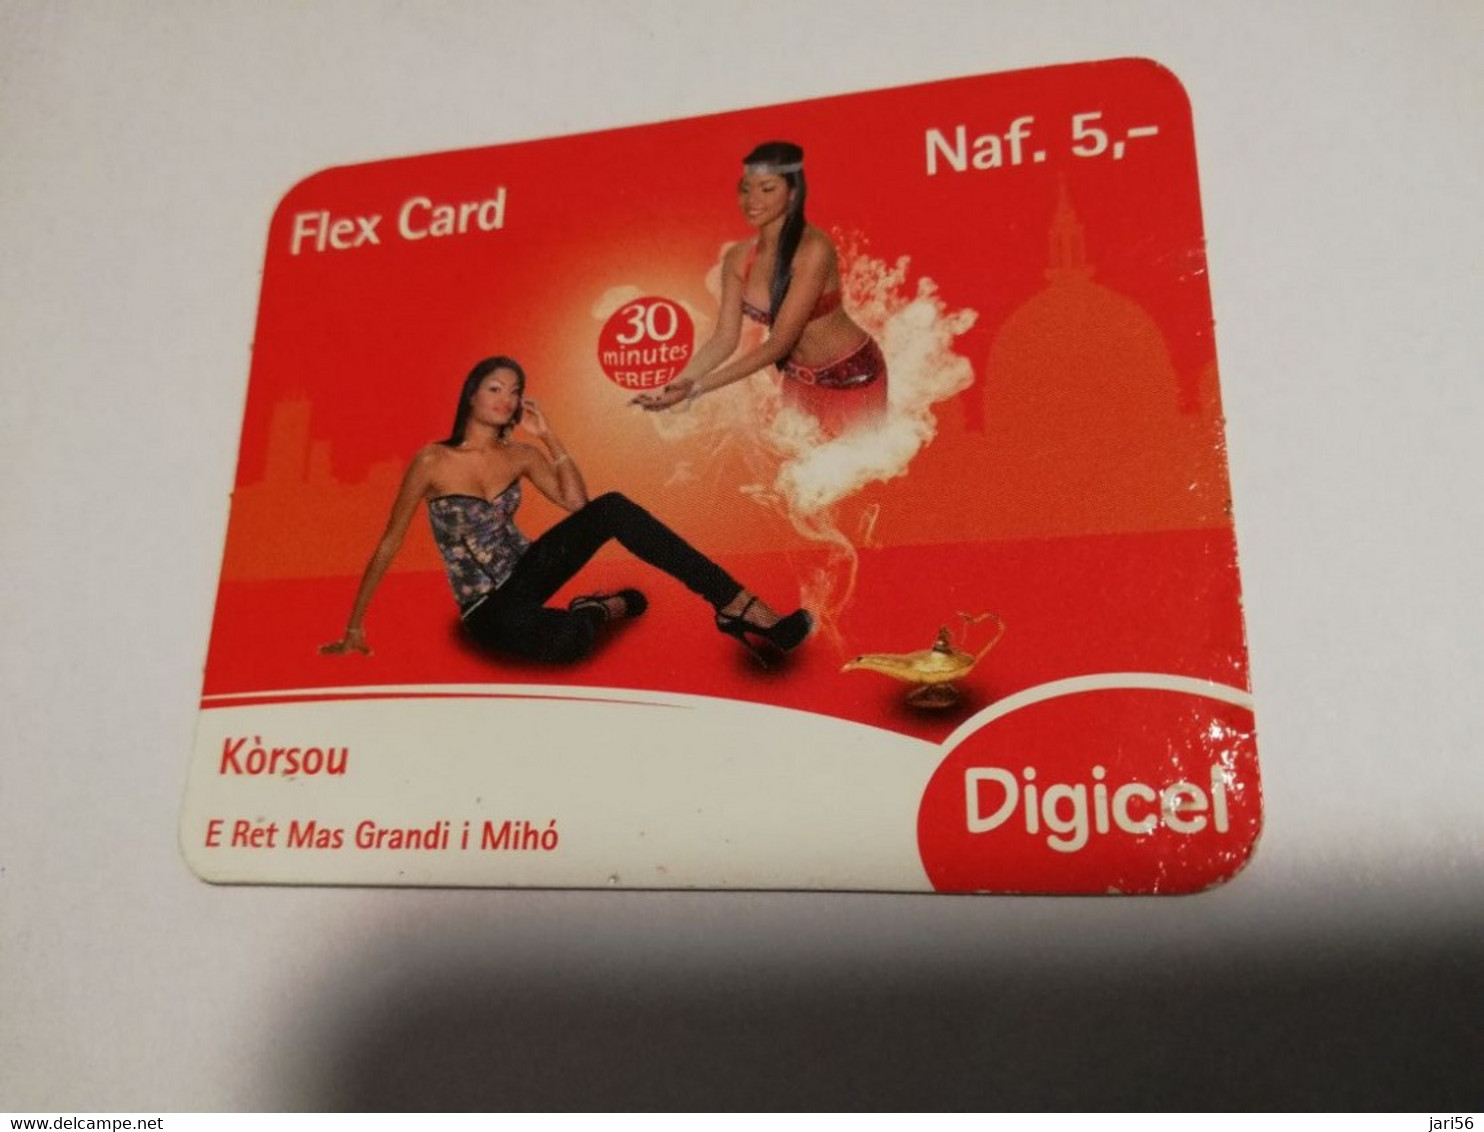 CURACAO NAF 5,- DIGICEL FLEX CARD  GINI IN A BOTTLE    26/05/2013   ** 4048** - Antillas (Nerlandesas)